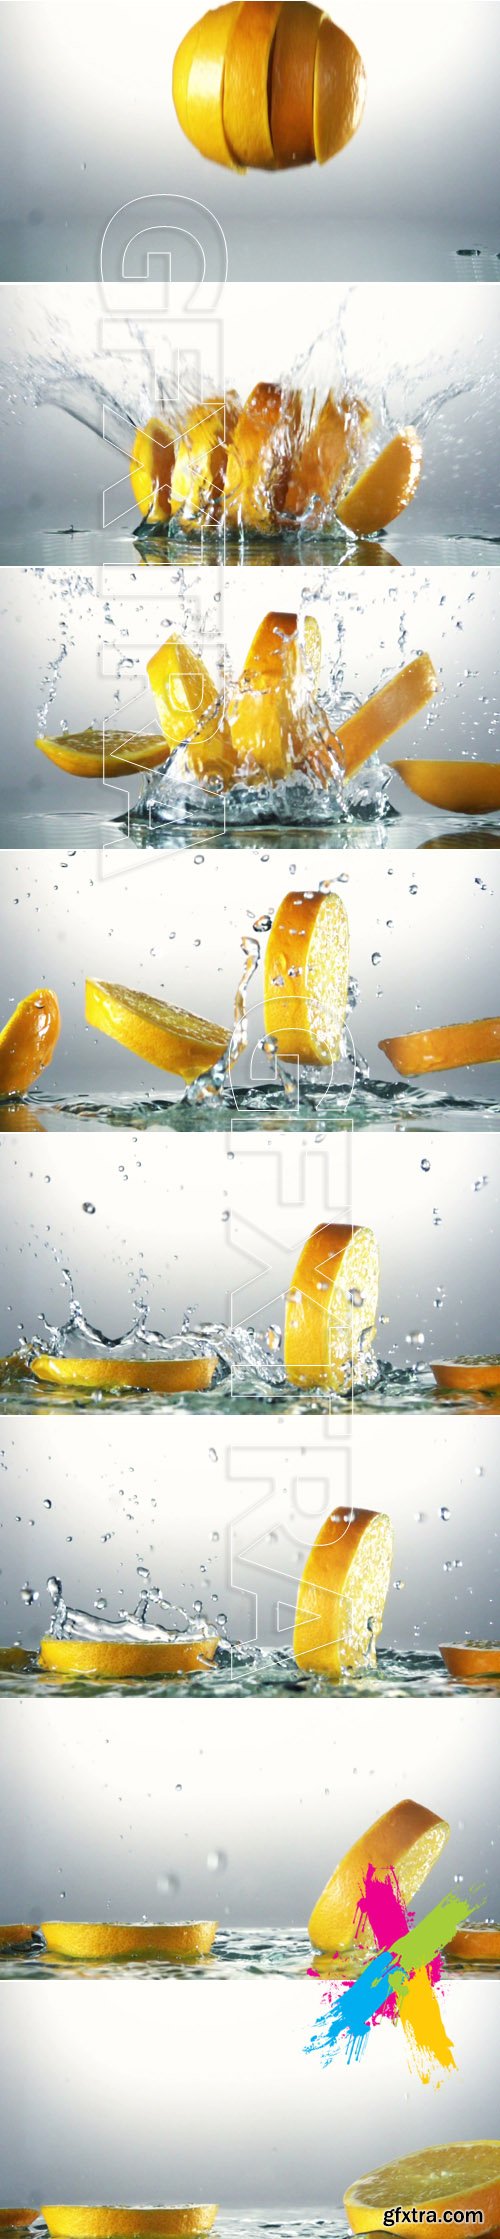 Orange slices splashing into water slow motion Footage